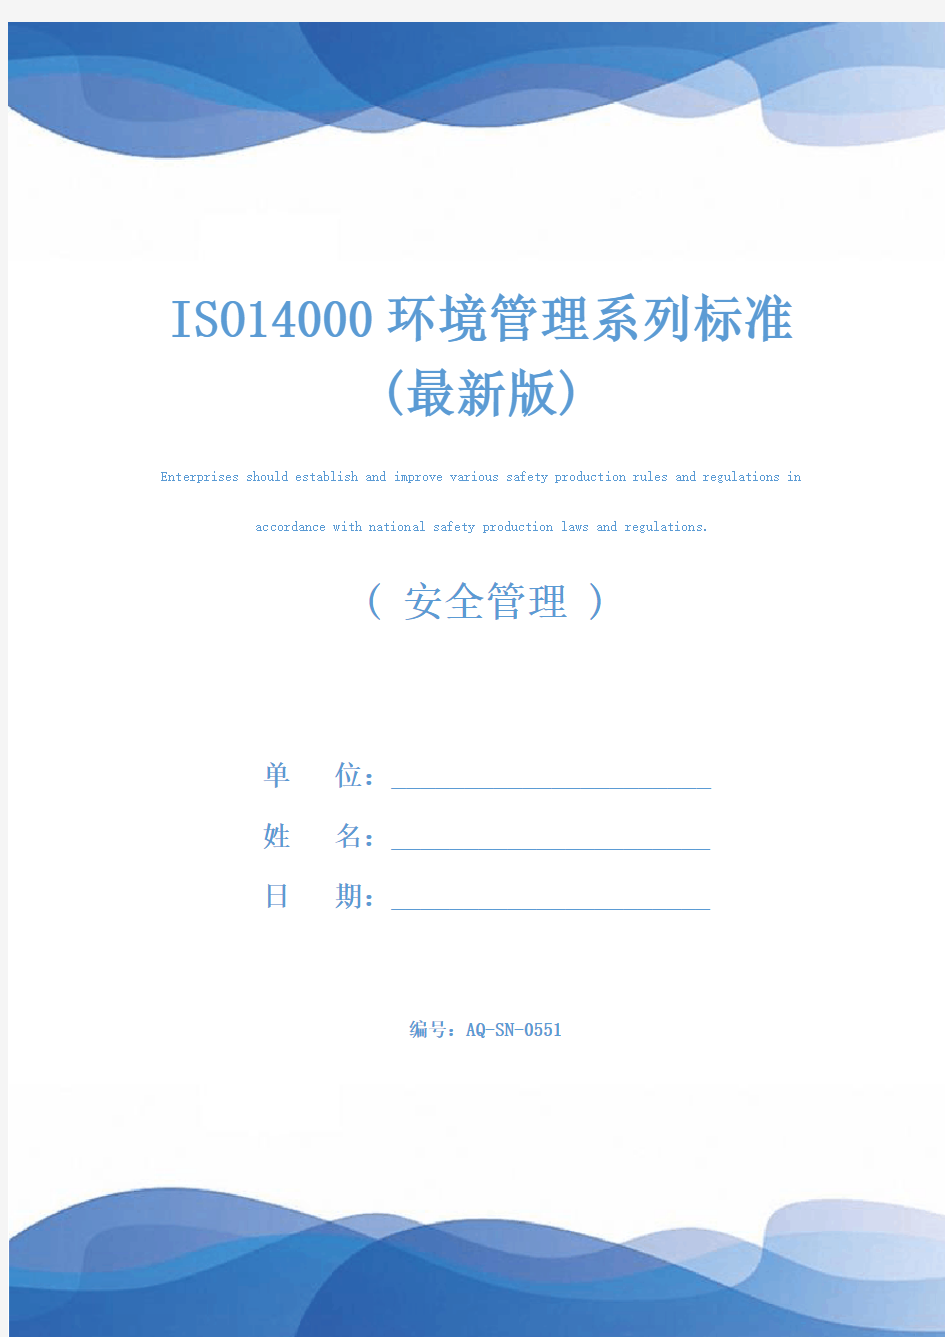 ISO14000环境管理系列标准(最新版)